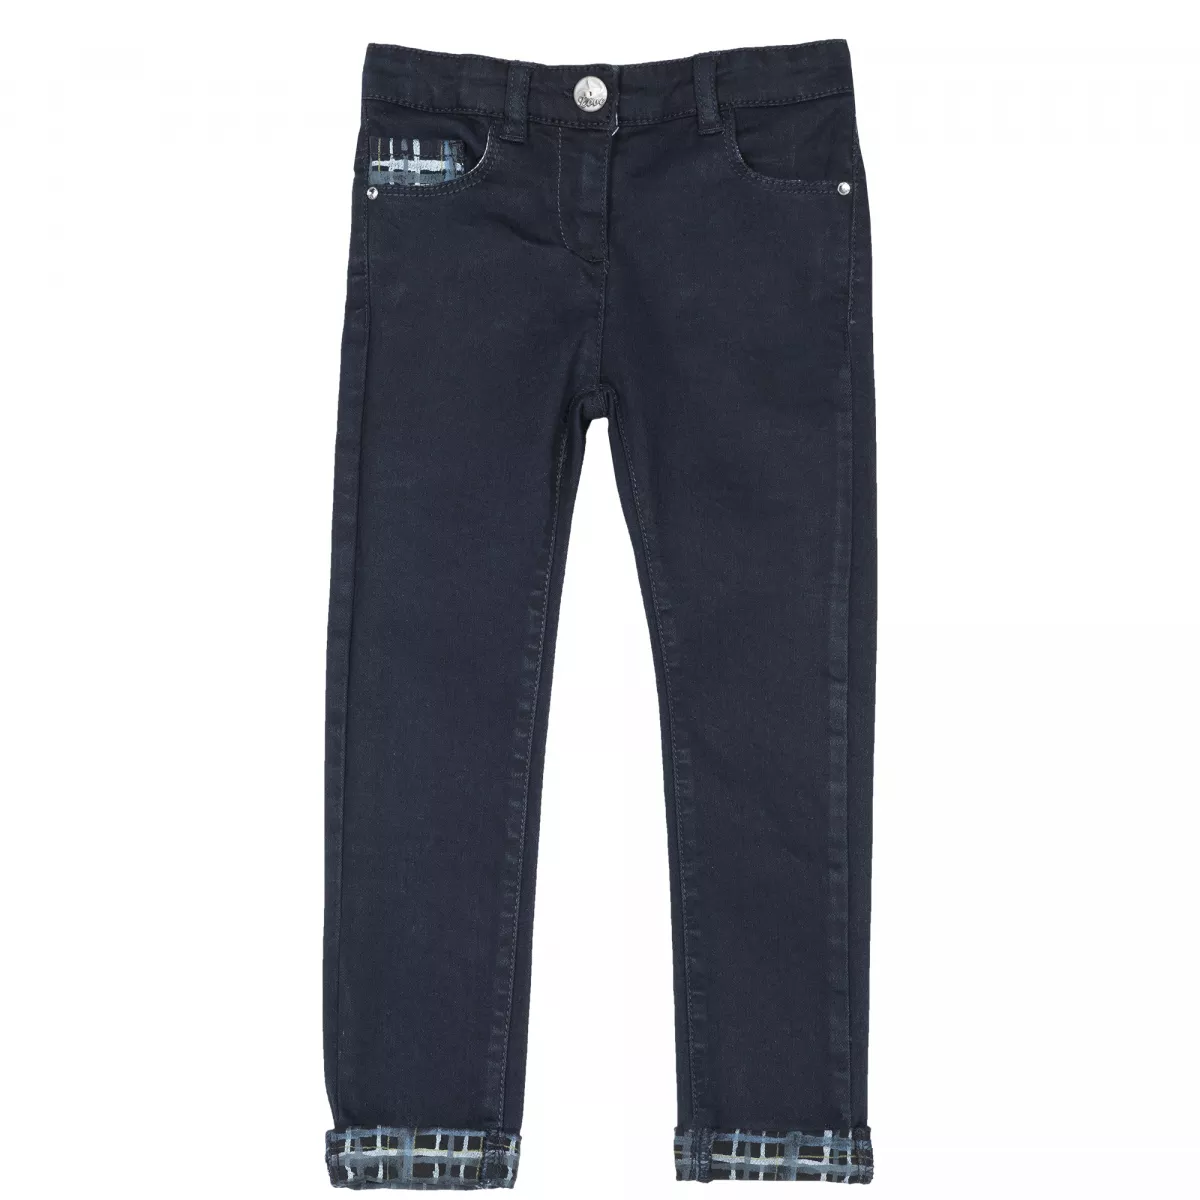 Pantaloni lungi jeans copii Chicco, albastru inchis, 98